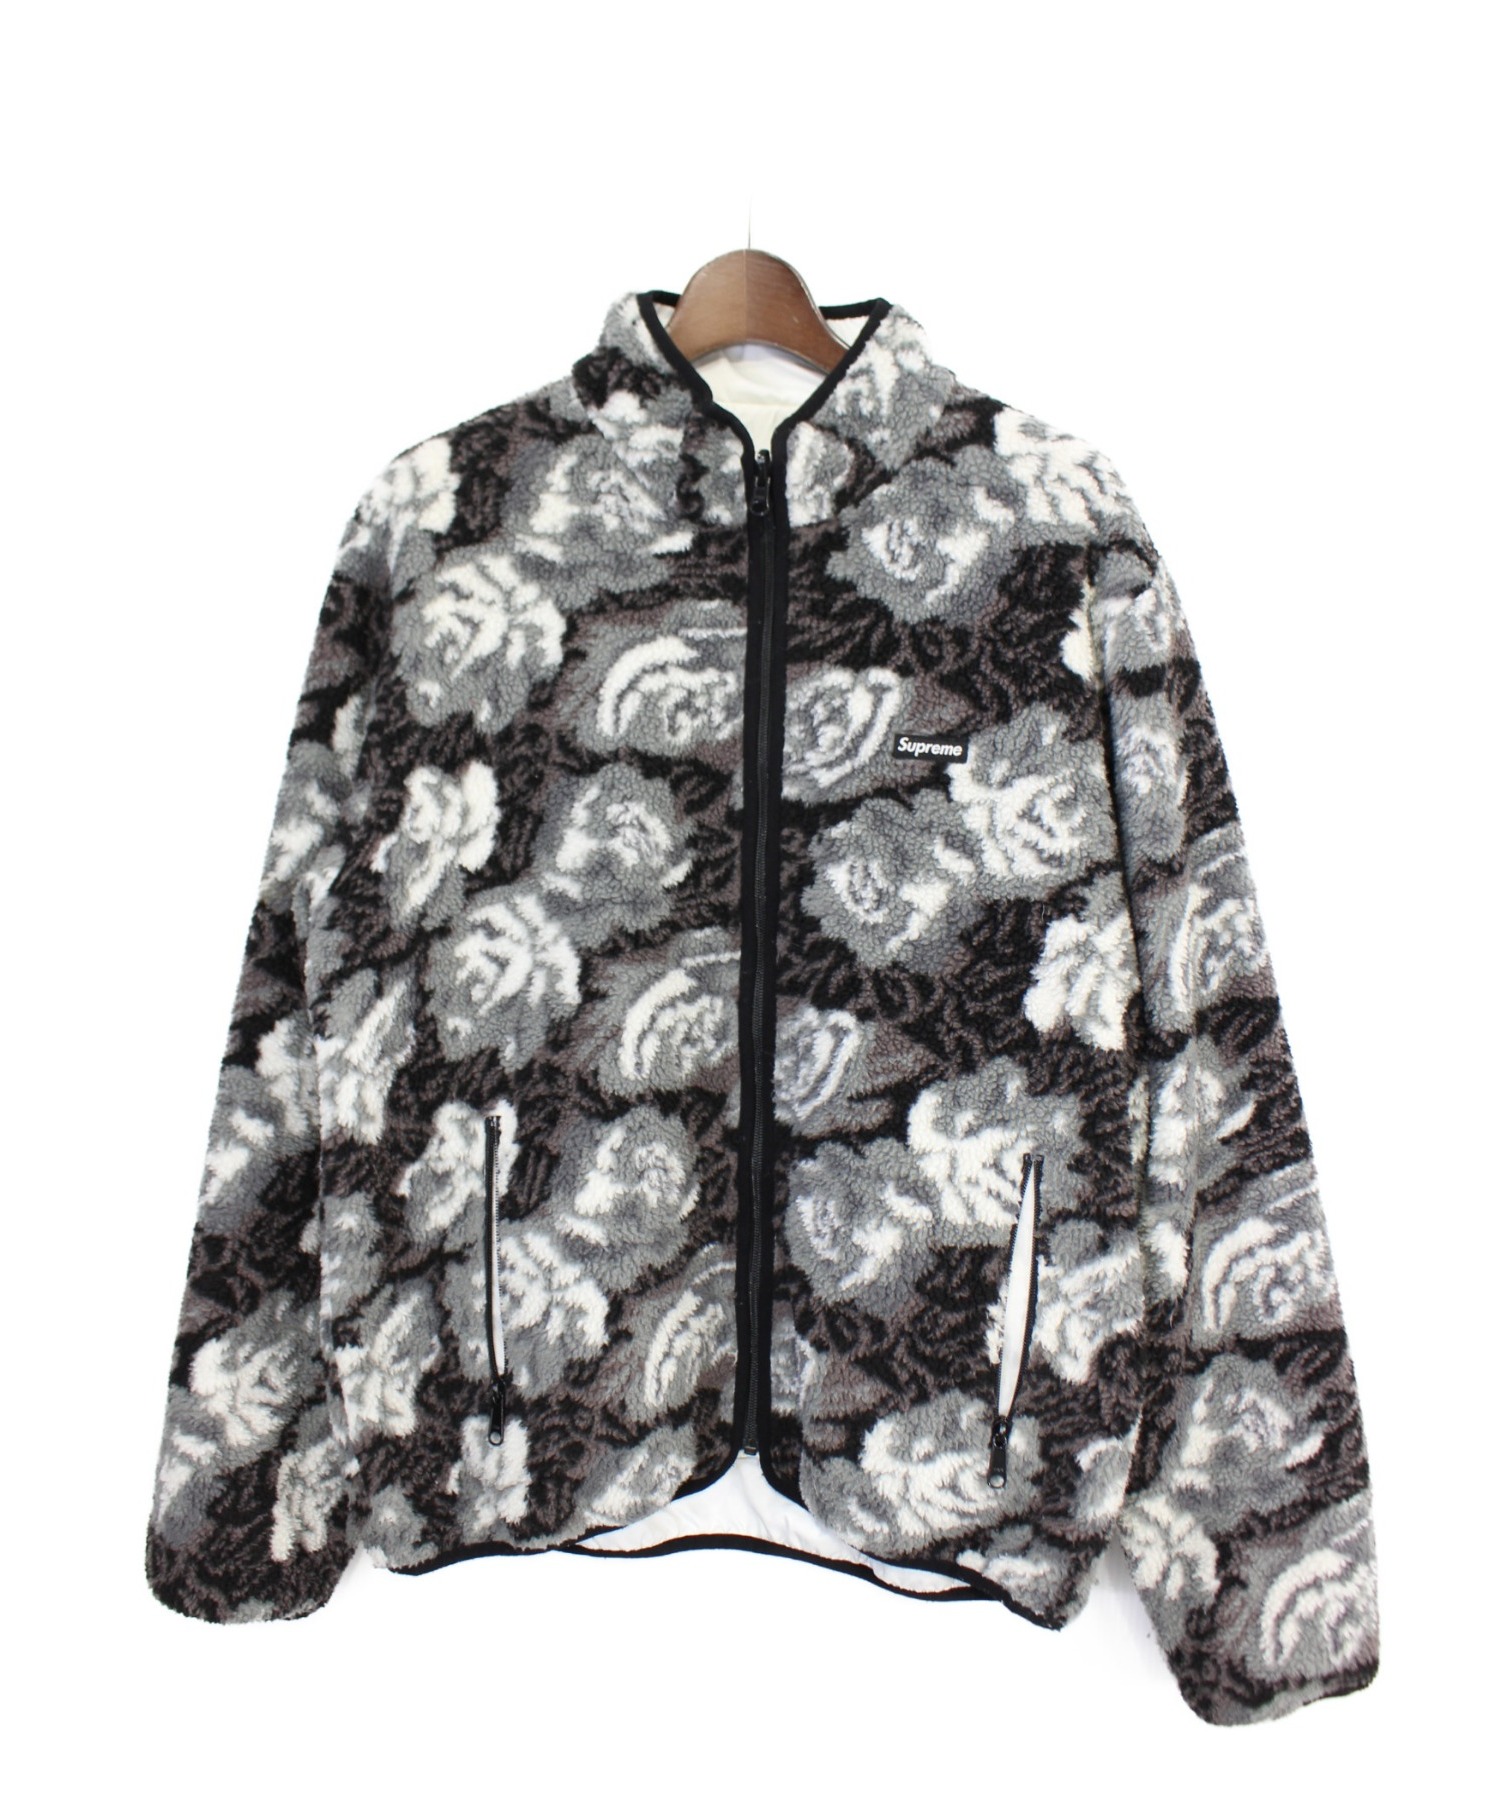 Supreme Roses Sherpa Fleece Jacket